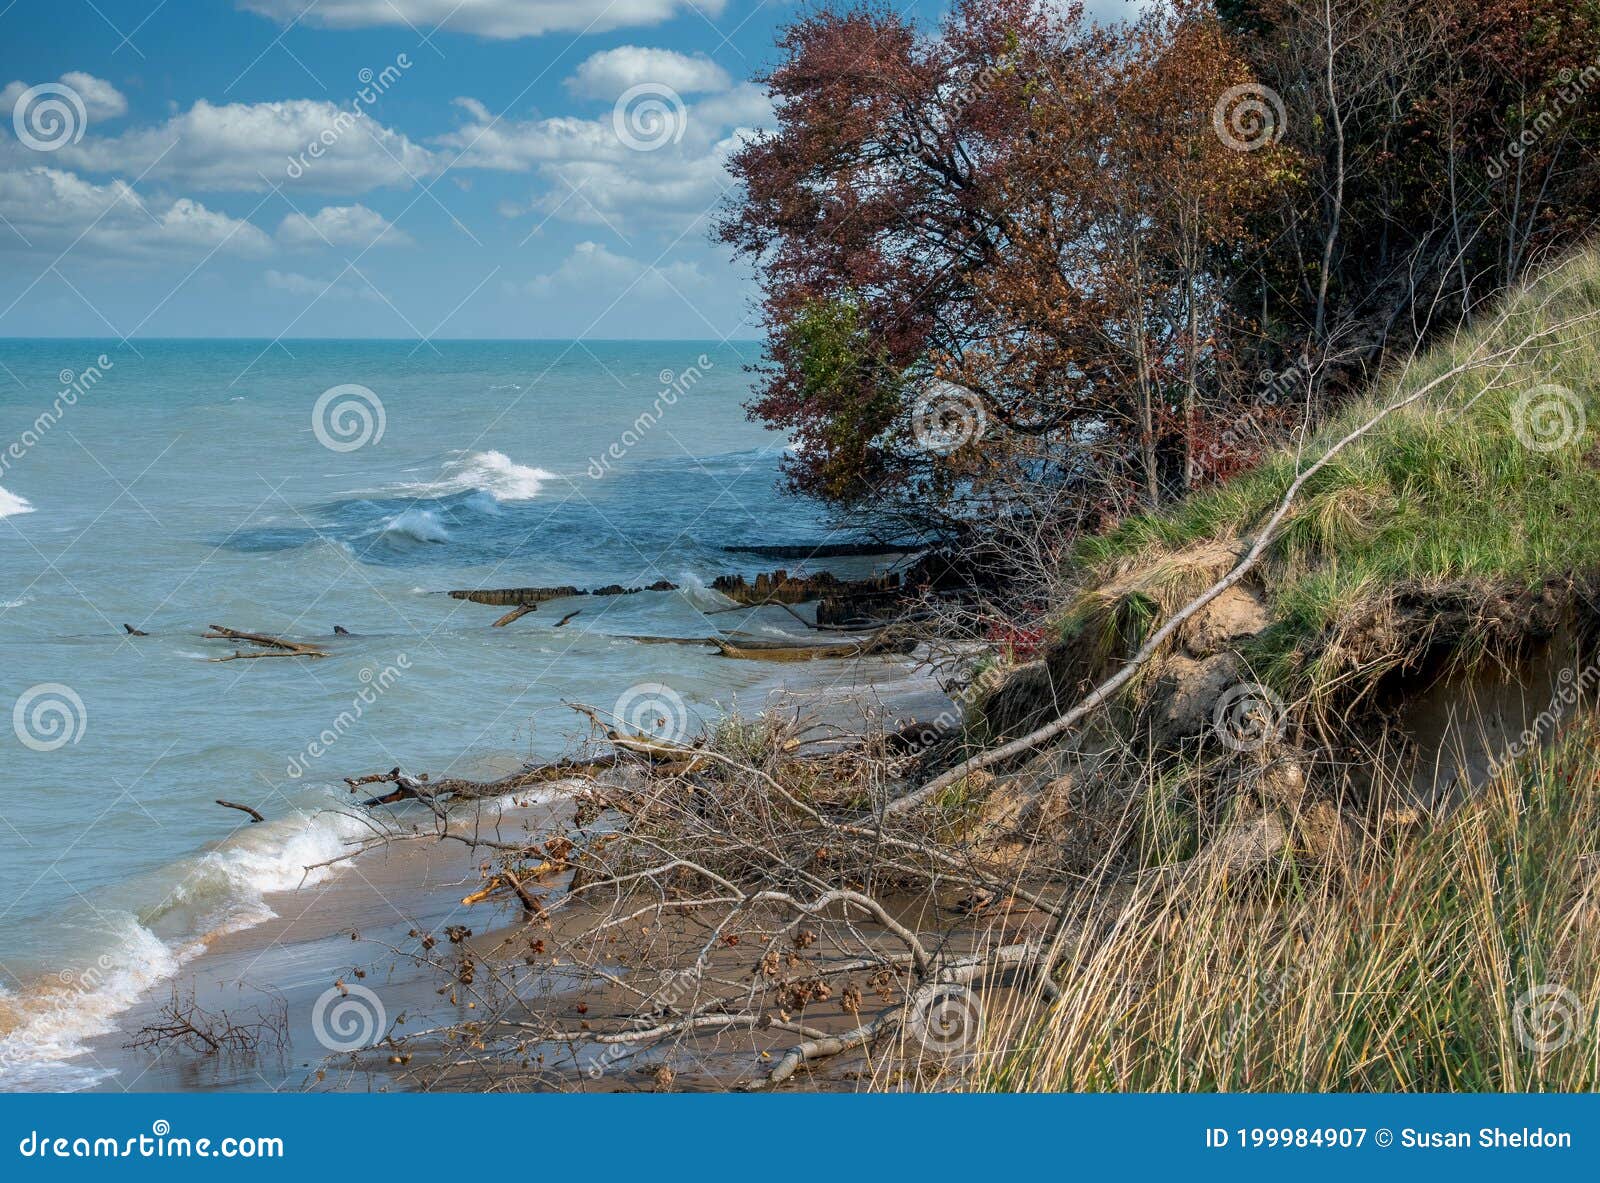 beach erosion on the shores of lake michigan